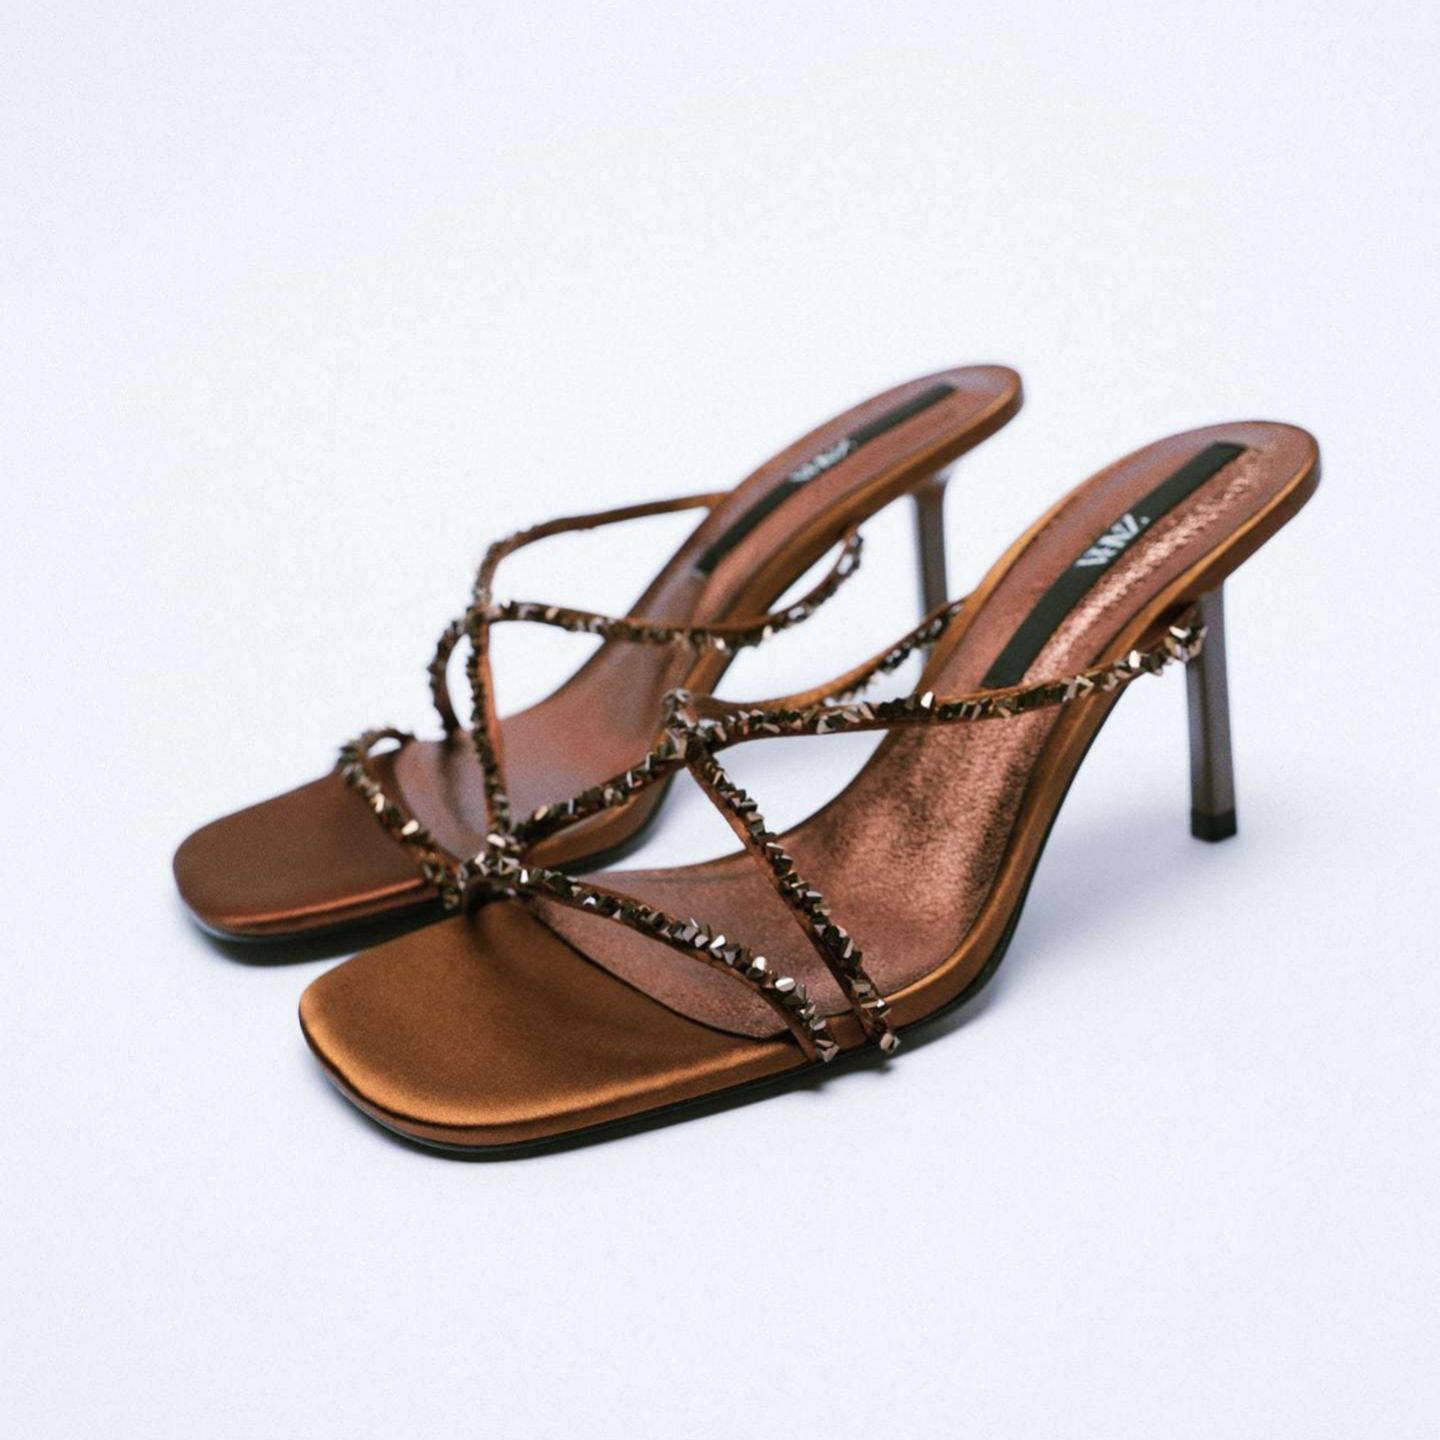 Zapato tipo sandalia de tacón de piel con tiras de brillos. Acabada en punta cuadrada. Zara (49,95 euros).